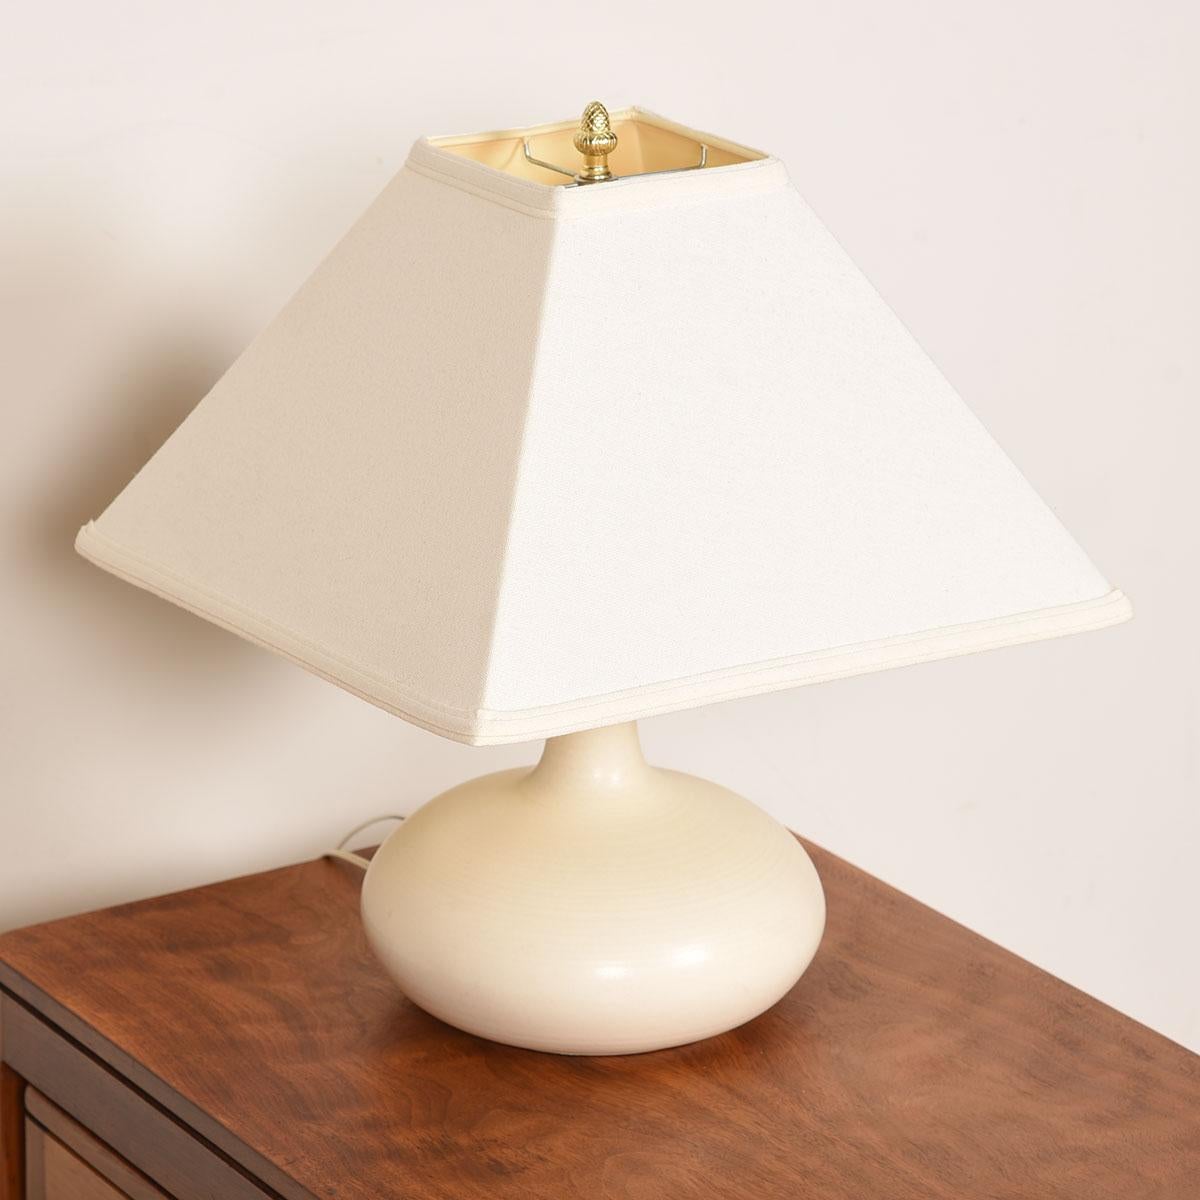 Mid-Century Modern Small Round Bostlund Table Lamp by Lotte & Gunnar Bostlund For Sale